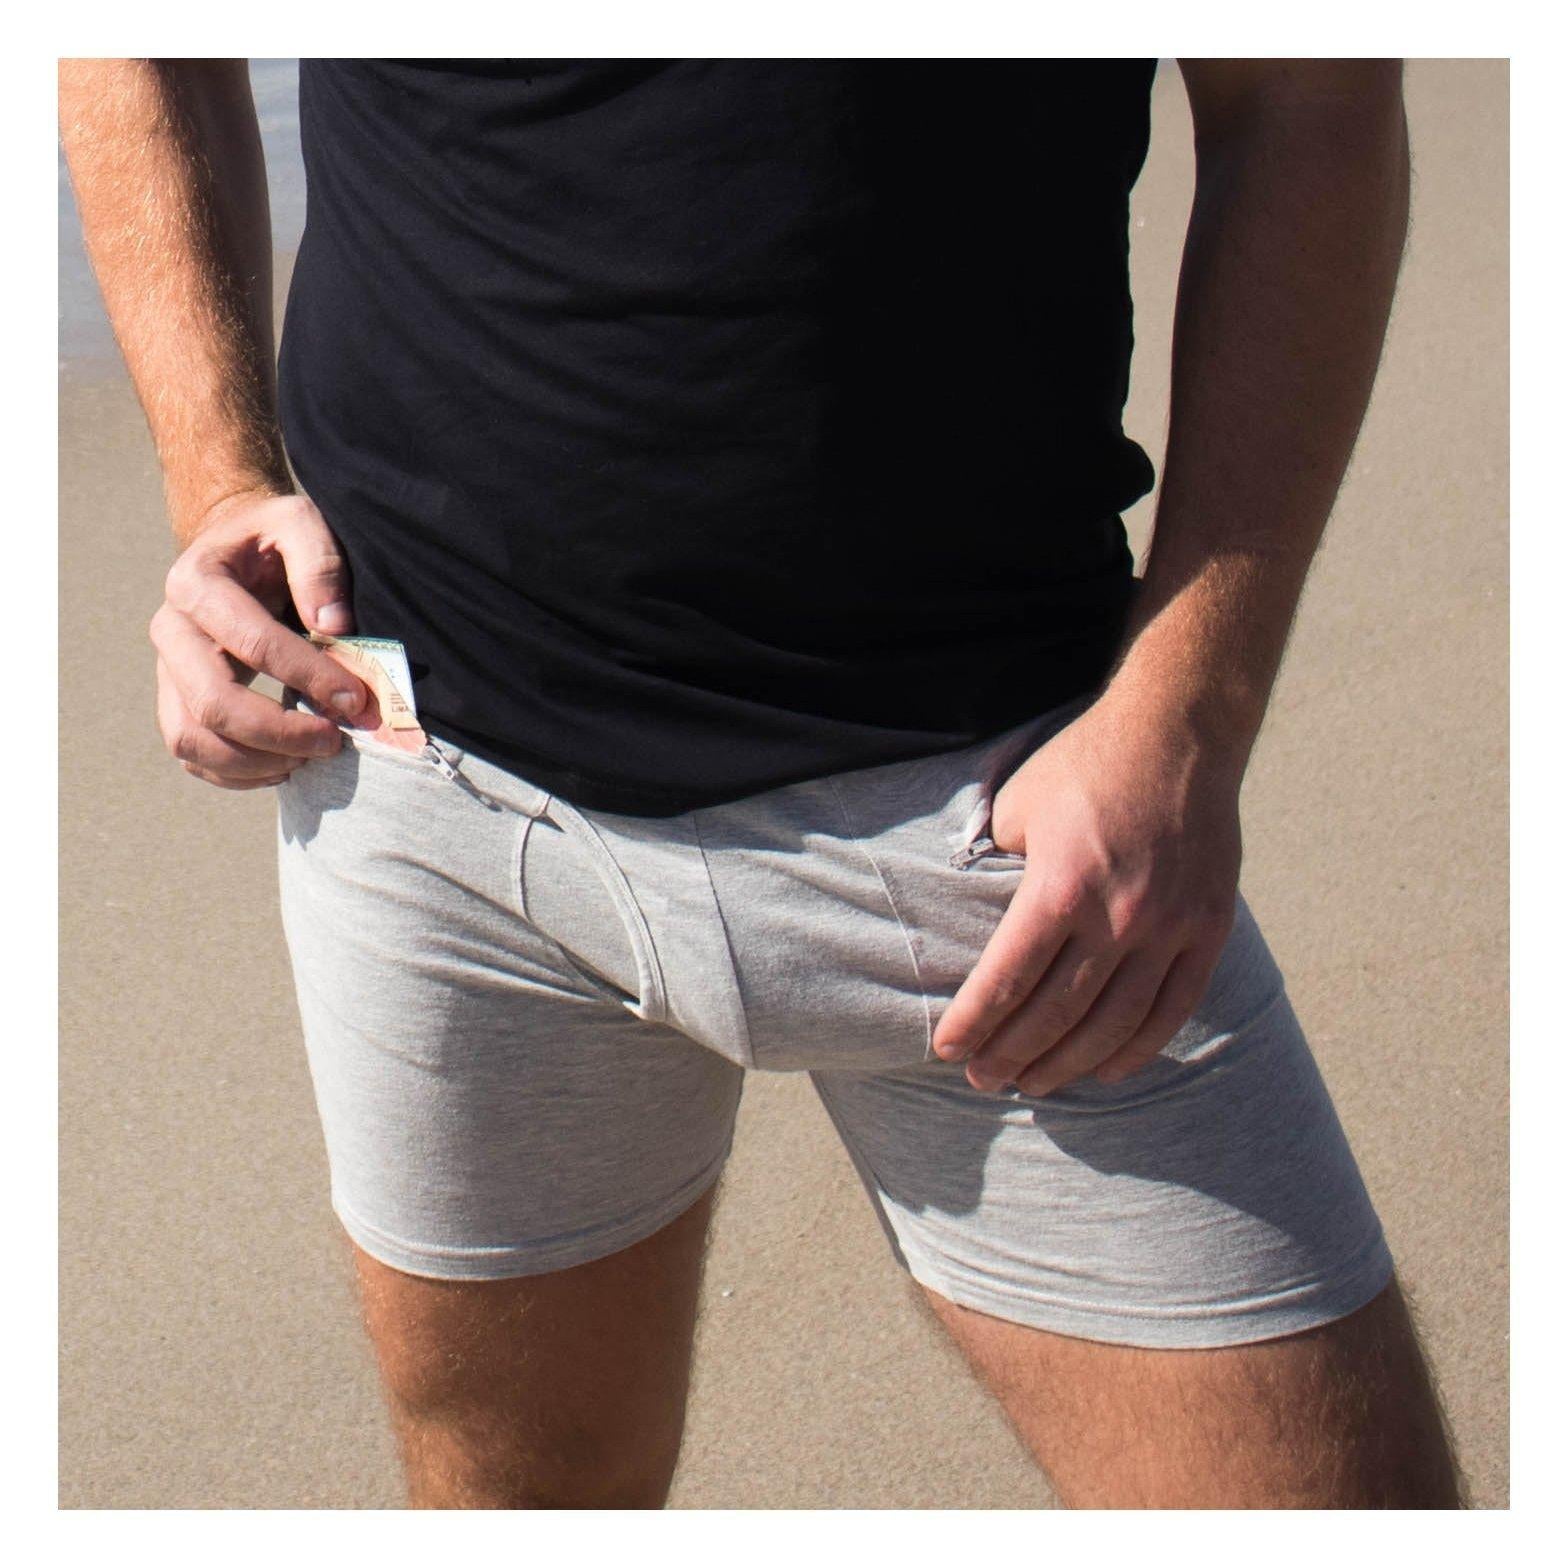 Men's underwear with hidden safety pockets - theft protection gear